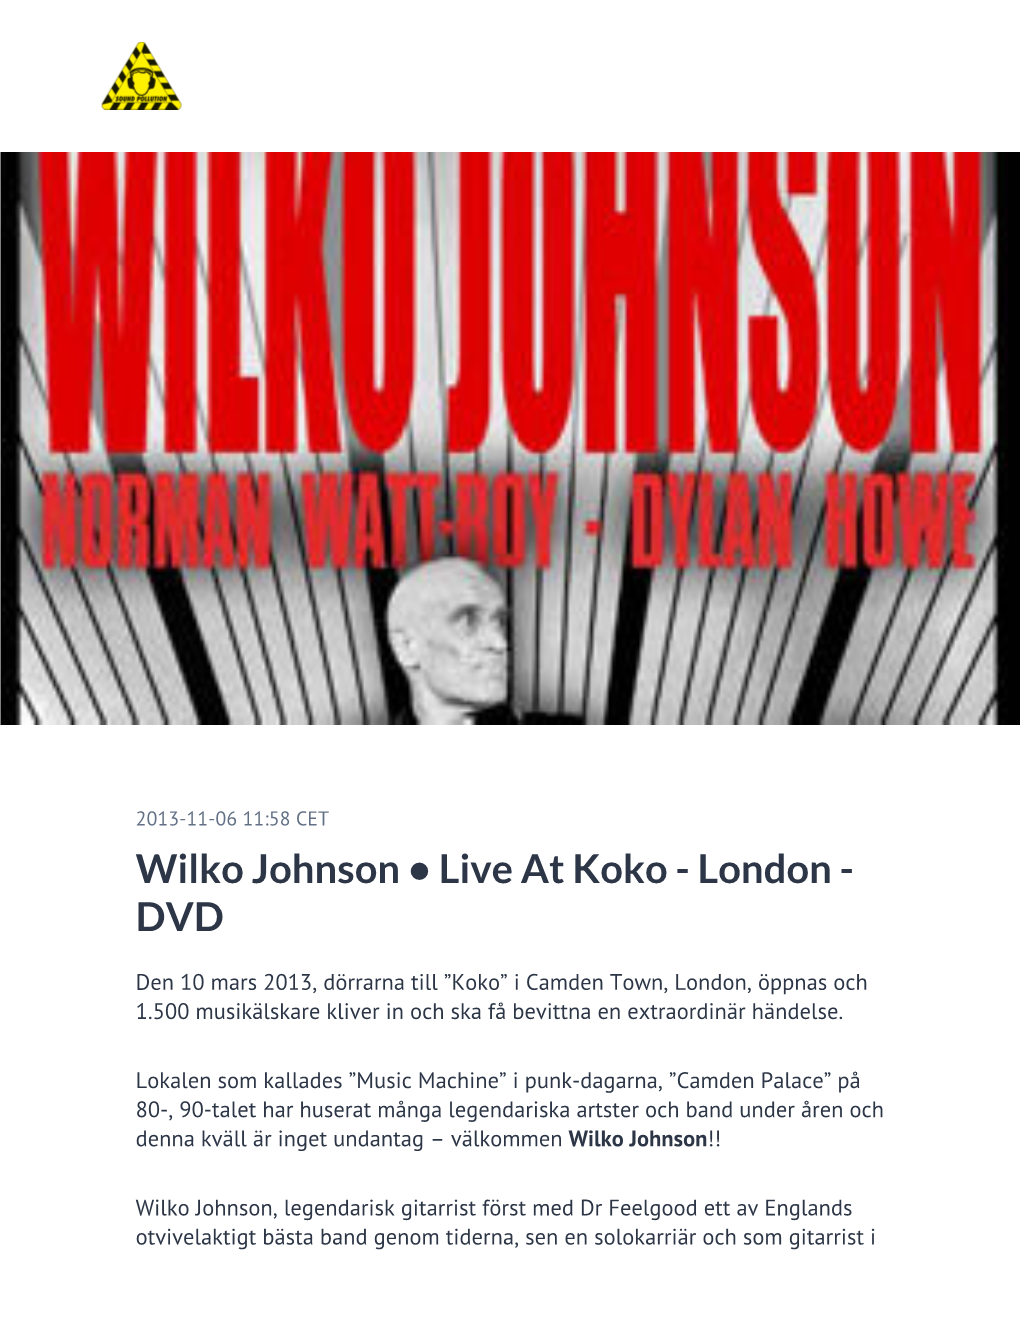 Wilko Johnson • Live at Koko - London - DVD